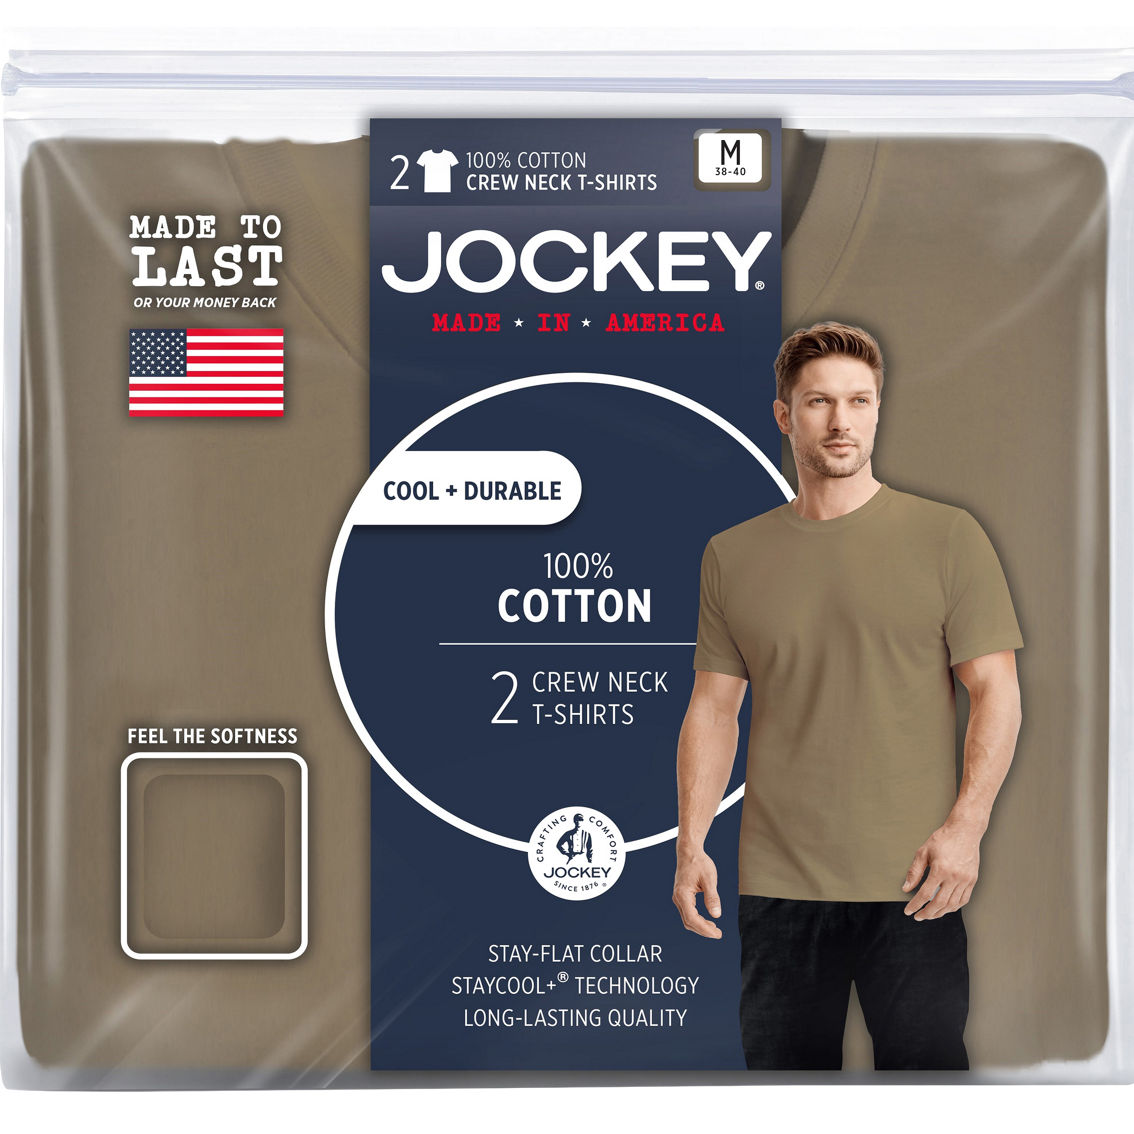 Jockey Made In America 100% Cotton Crew Neck 2 pk. - Image 6 of 9